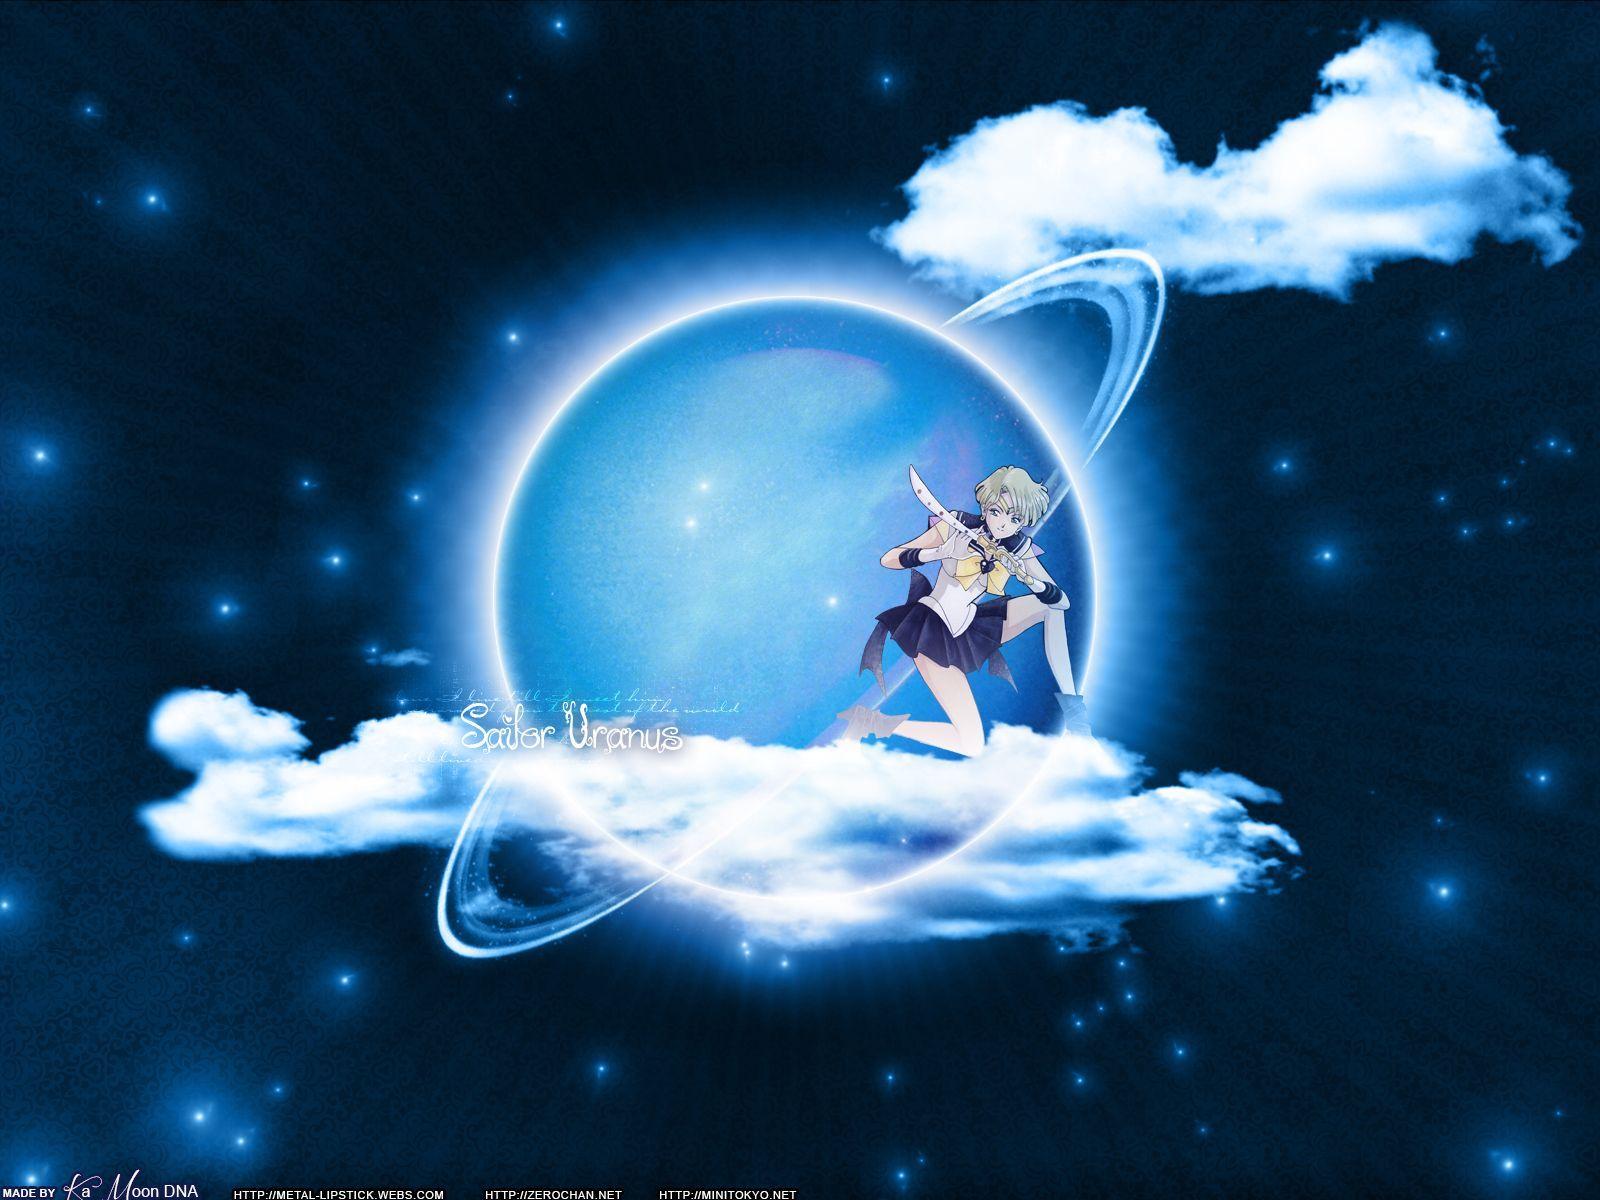 Sailor Uranus Haruka Anime. Sailor moon, Sailor uranus, Pretty guardian sailor moon